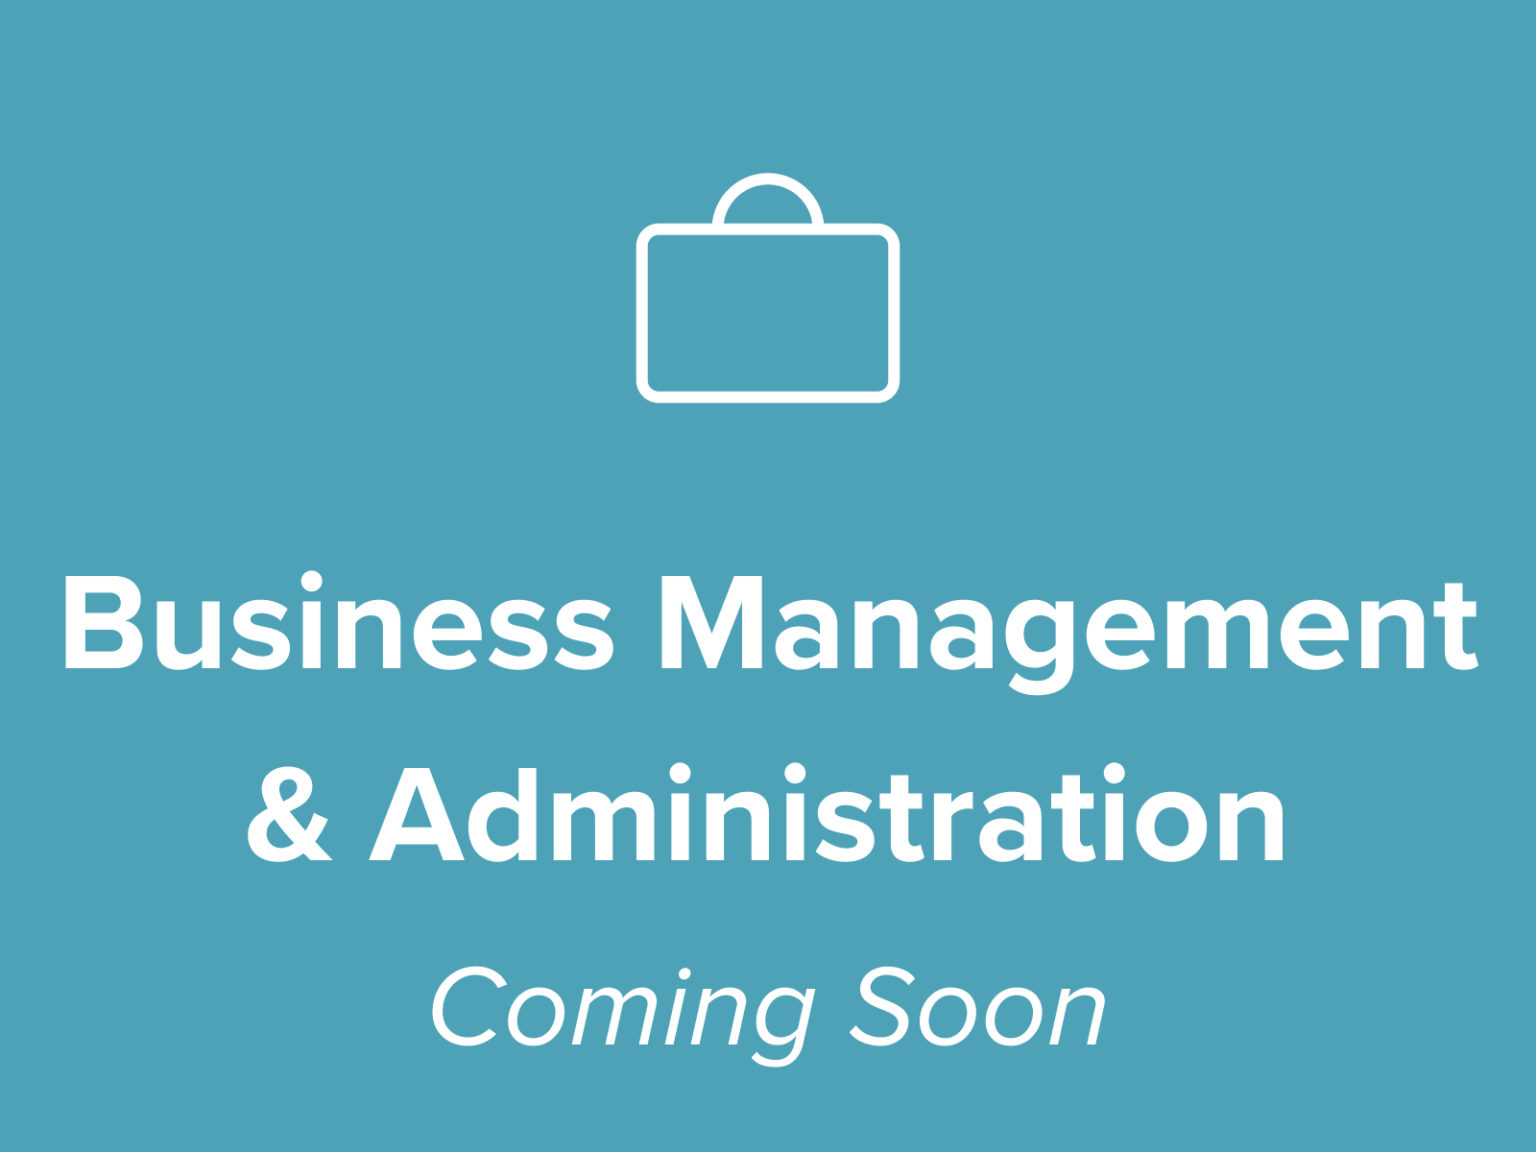 Business-Management-Administration-1536x1152